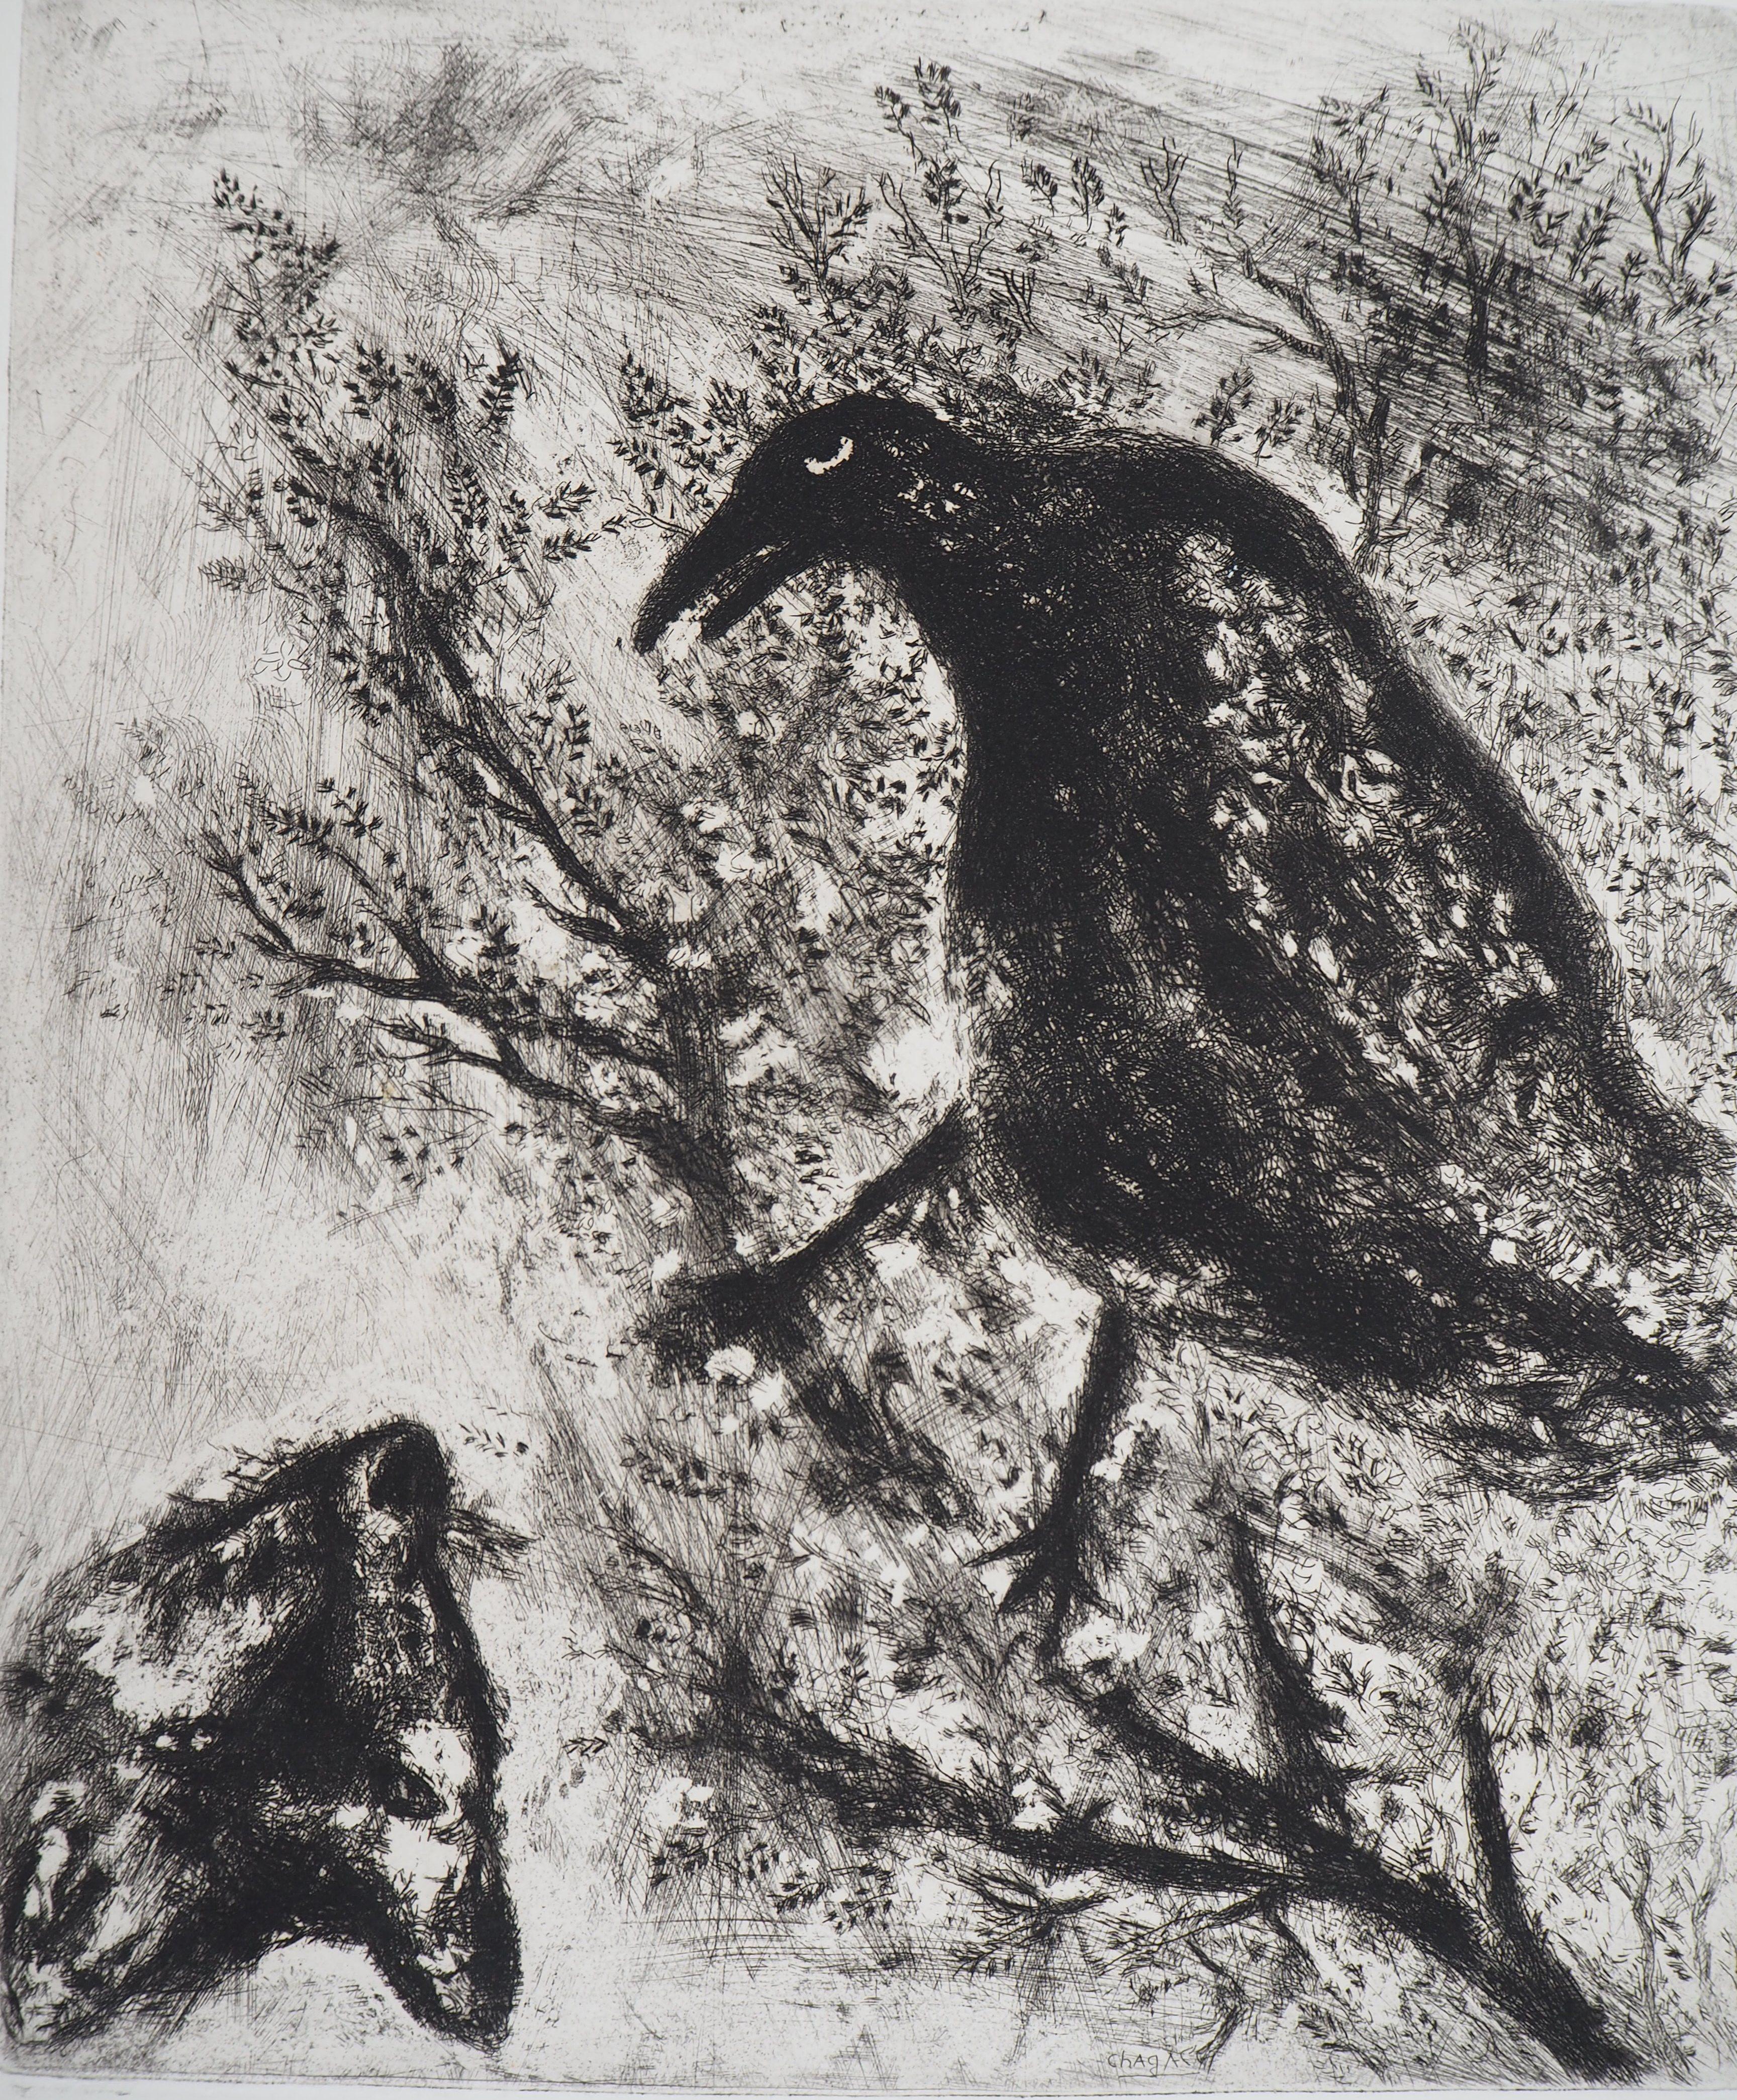 The Raven and the Fox - Original etching - Ref. Sorlier #195 (Grau), Animal Print, von Marc Chagall